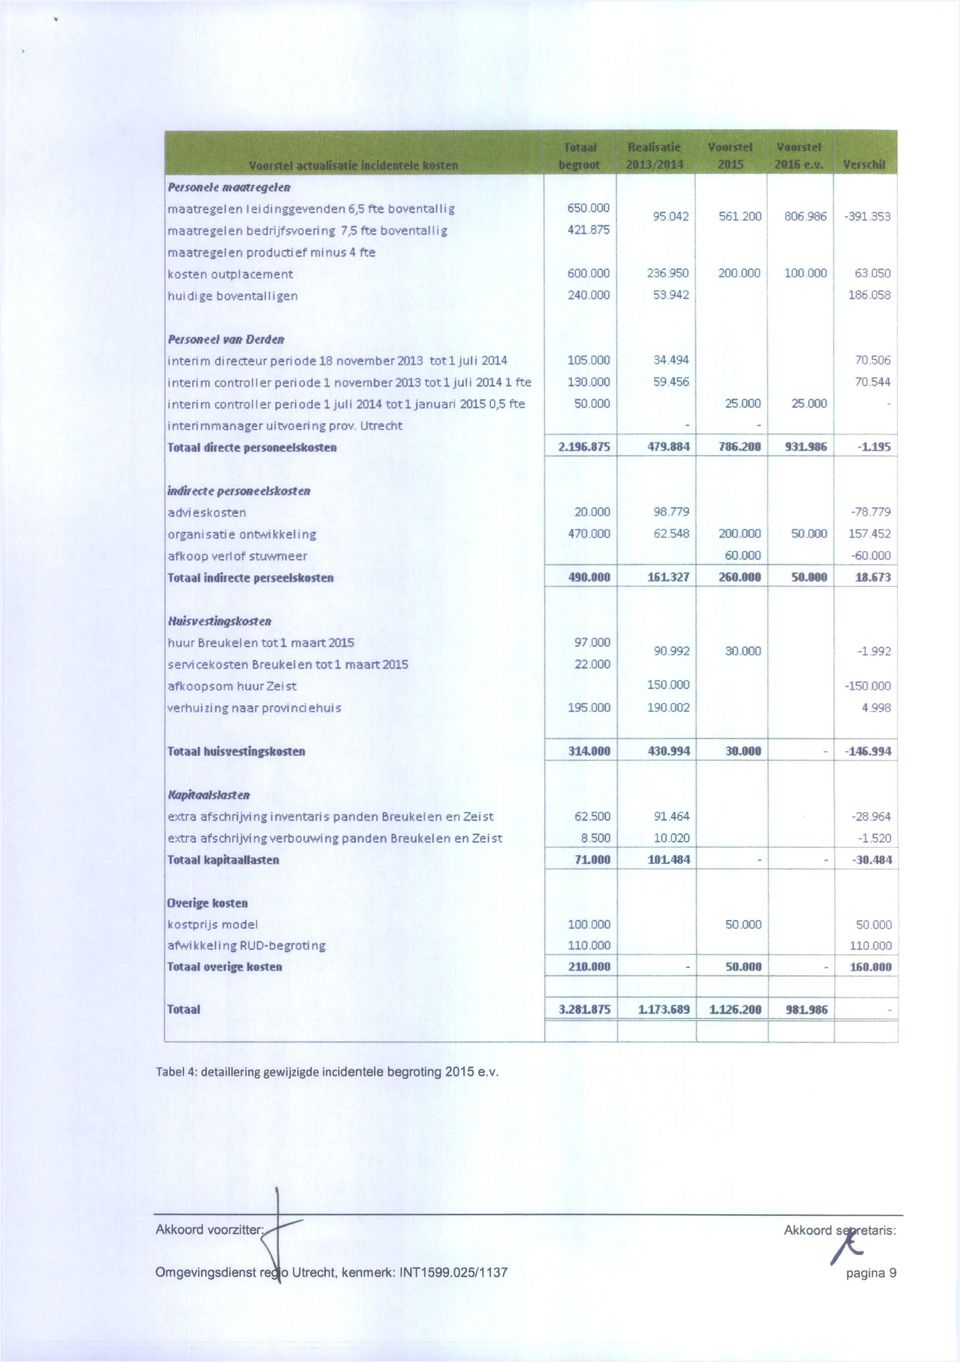 053 Ptisoneel va» Derötit interim directeur periode 18 november 2013 tot 1 juli 2014 105 000 34 494 70 506 interim controller periode 1 november 2013 tot 1 juli 2014 1 fte 130,000 59 456 70.